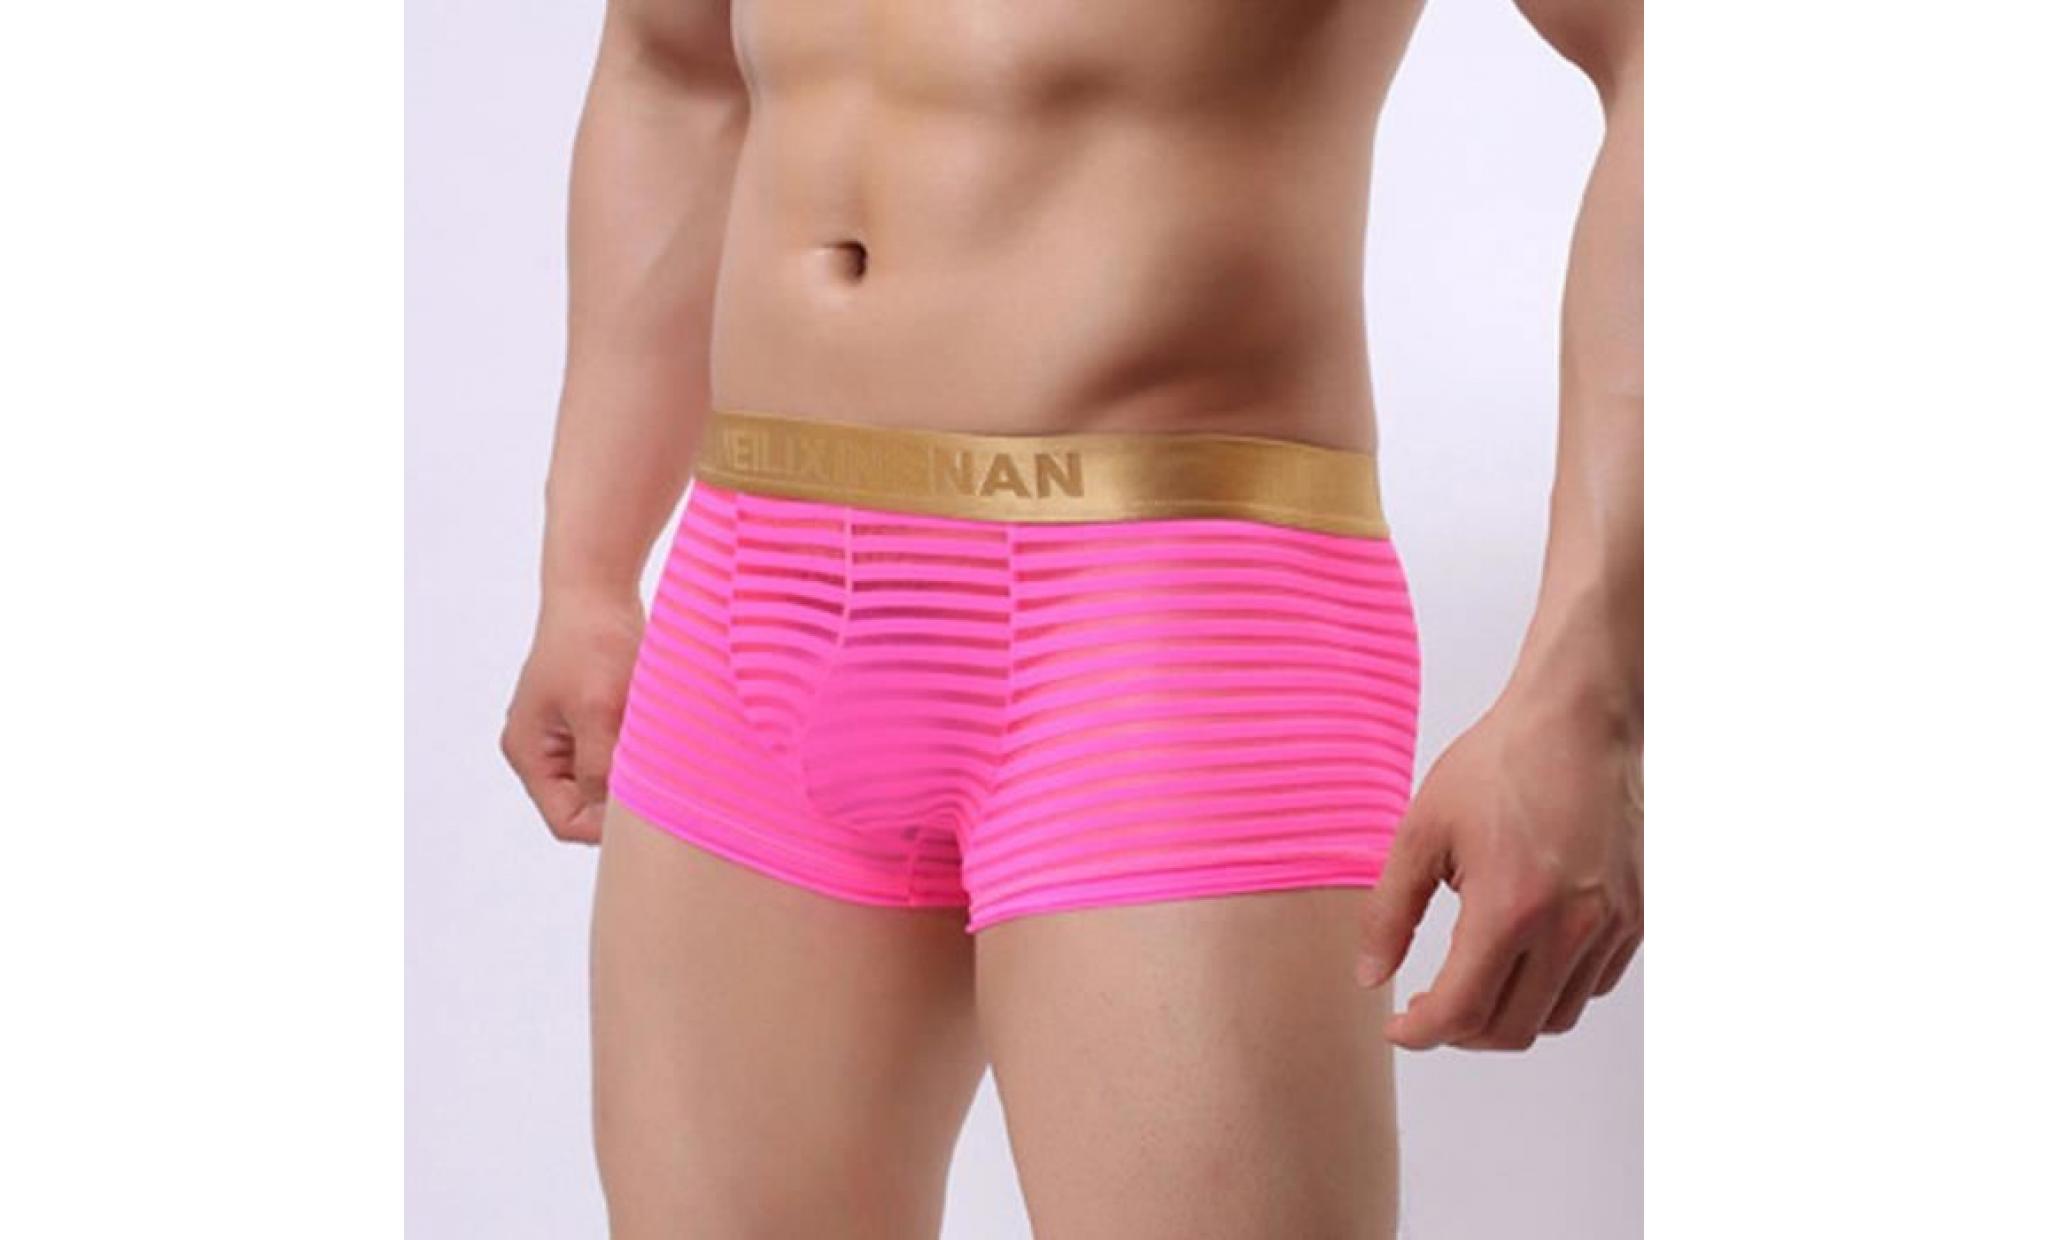 mode hommes striped transparent boxer slips taille basse sexy sous vêtements rose xl